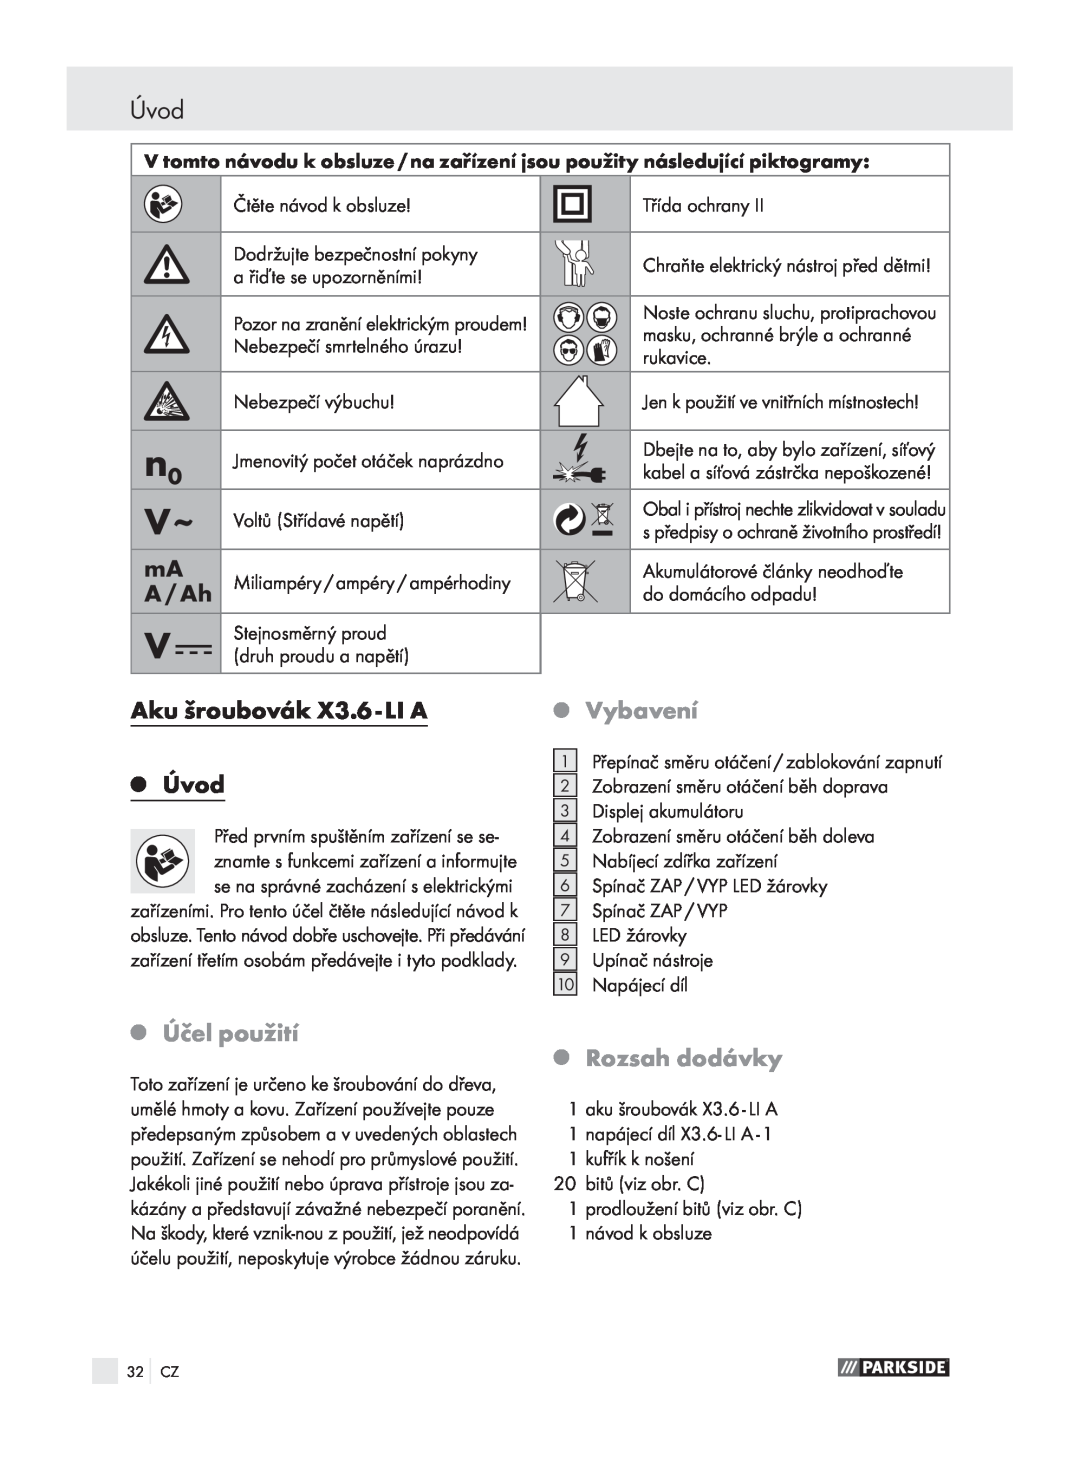 Parkside 6-LIA manual Aku šroubovák X3.6 - LI A, Q Vybavení, Q Úvod, Q Účel použití Q Rozsah dodávky, A / Ah 